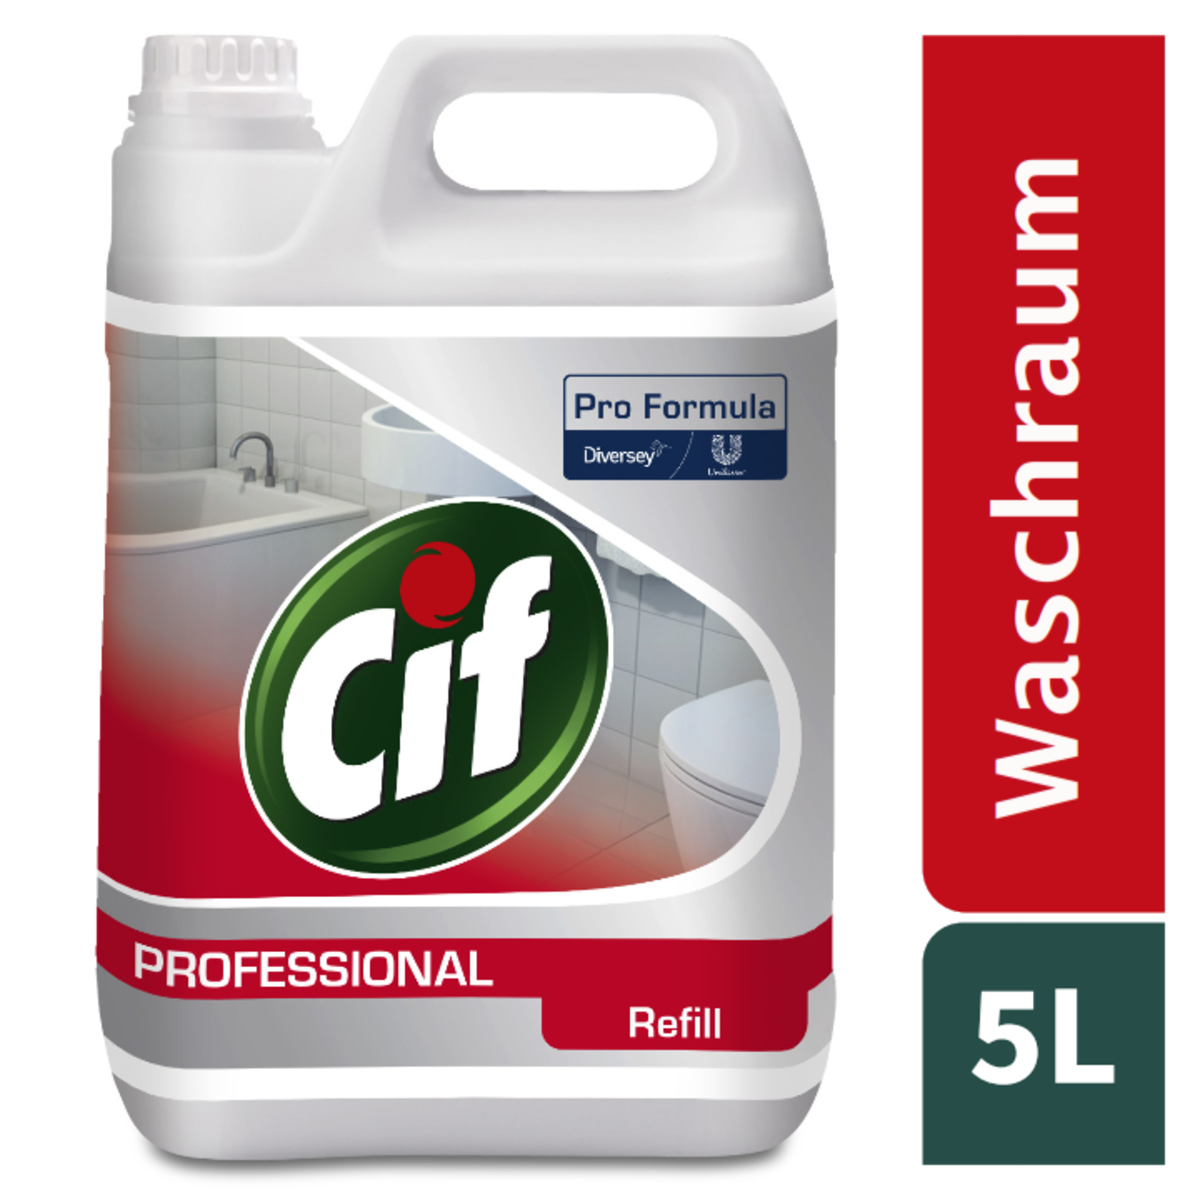 Cif Pro Formula detergente bagno 2in1, 5 l